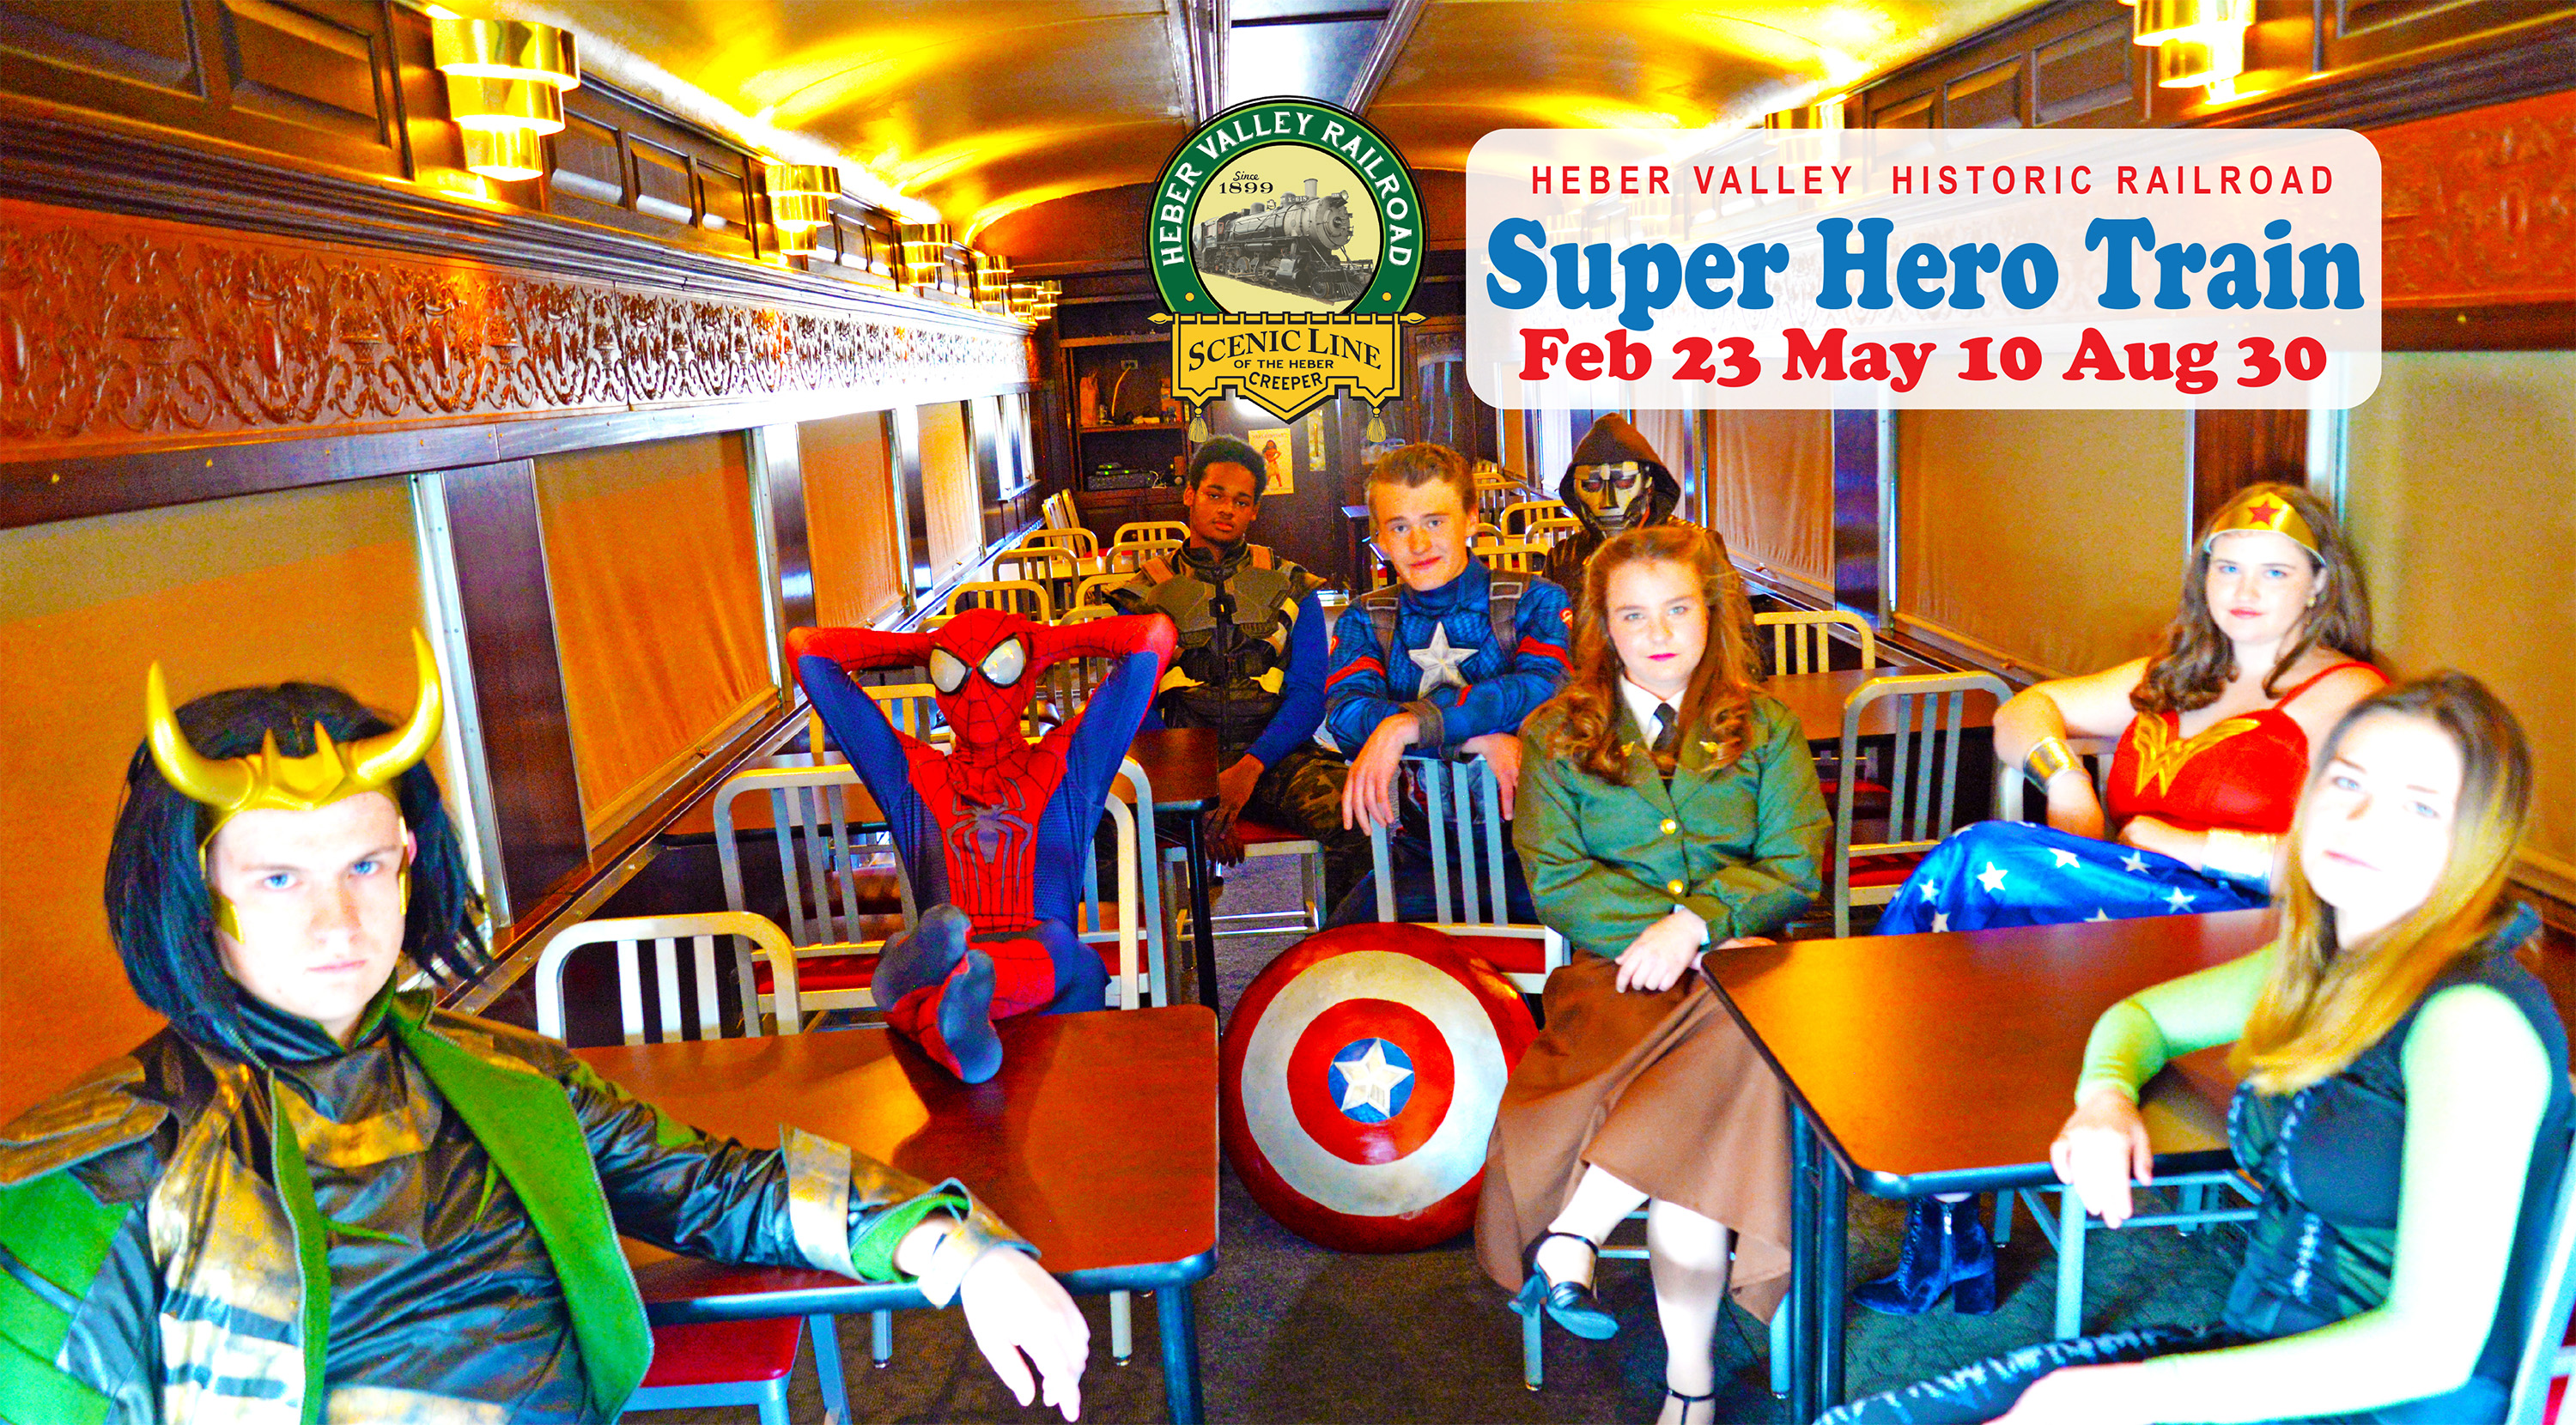 Super Hero Train at Heber Valley Railroad